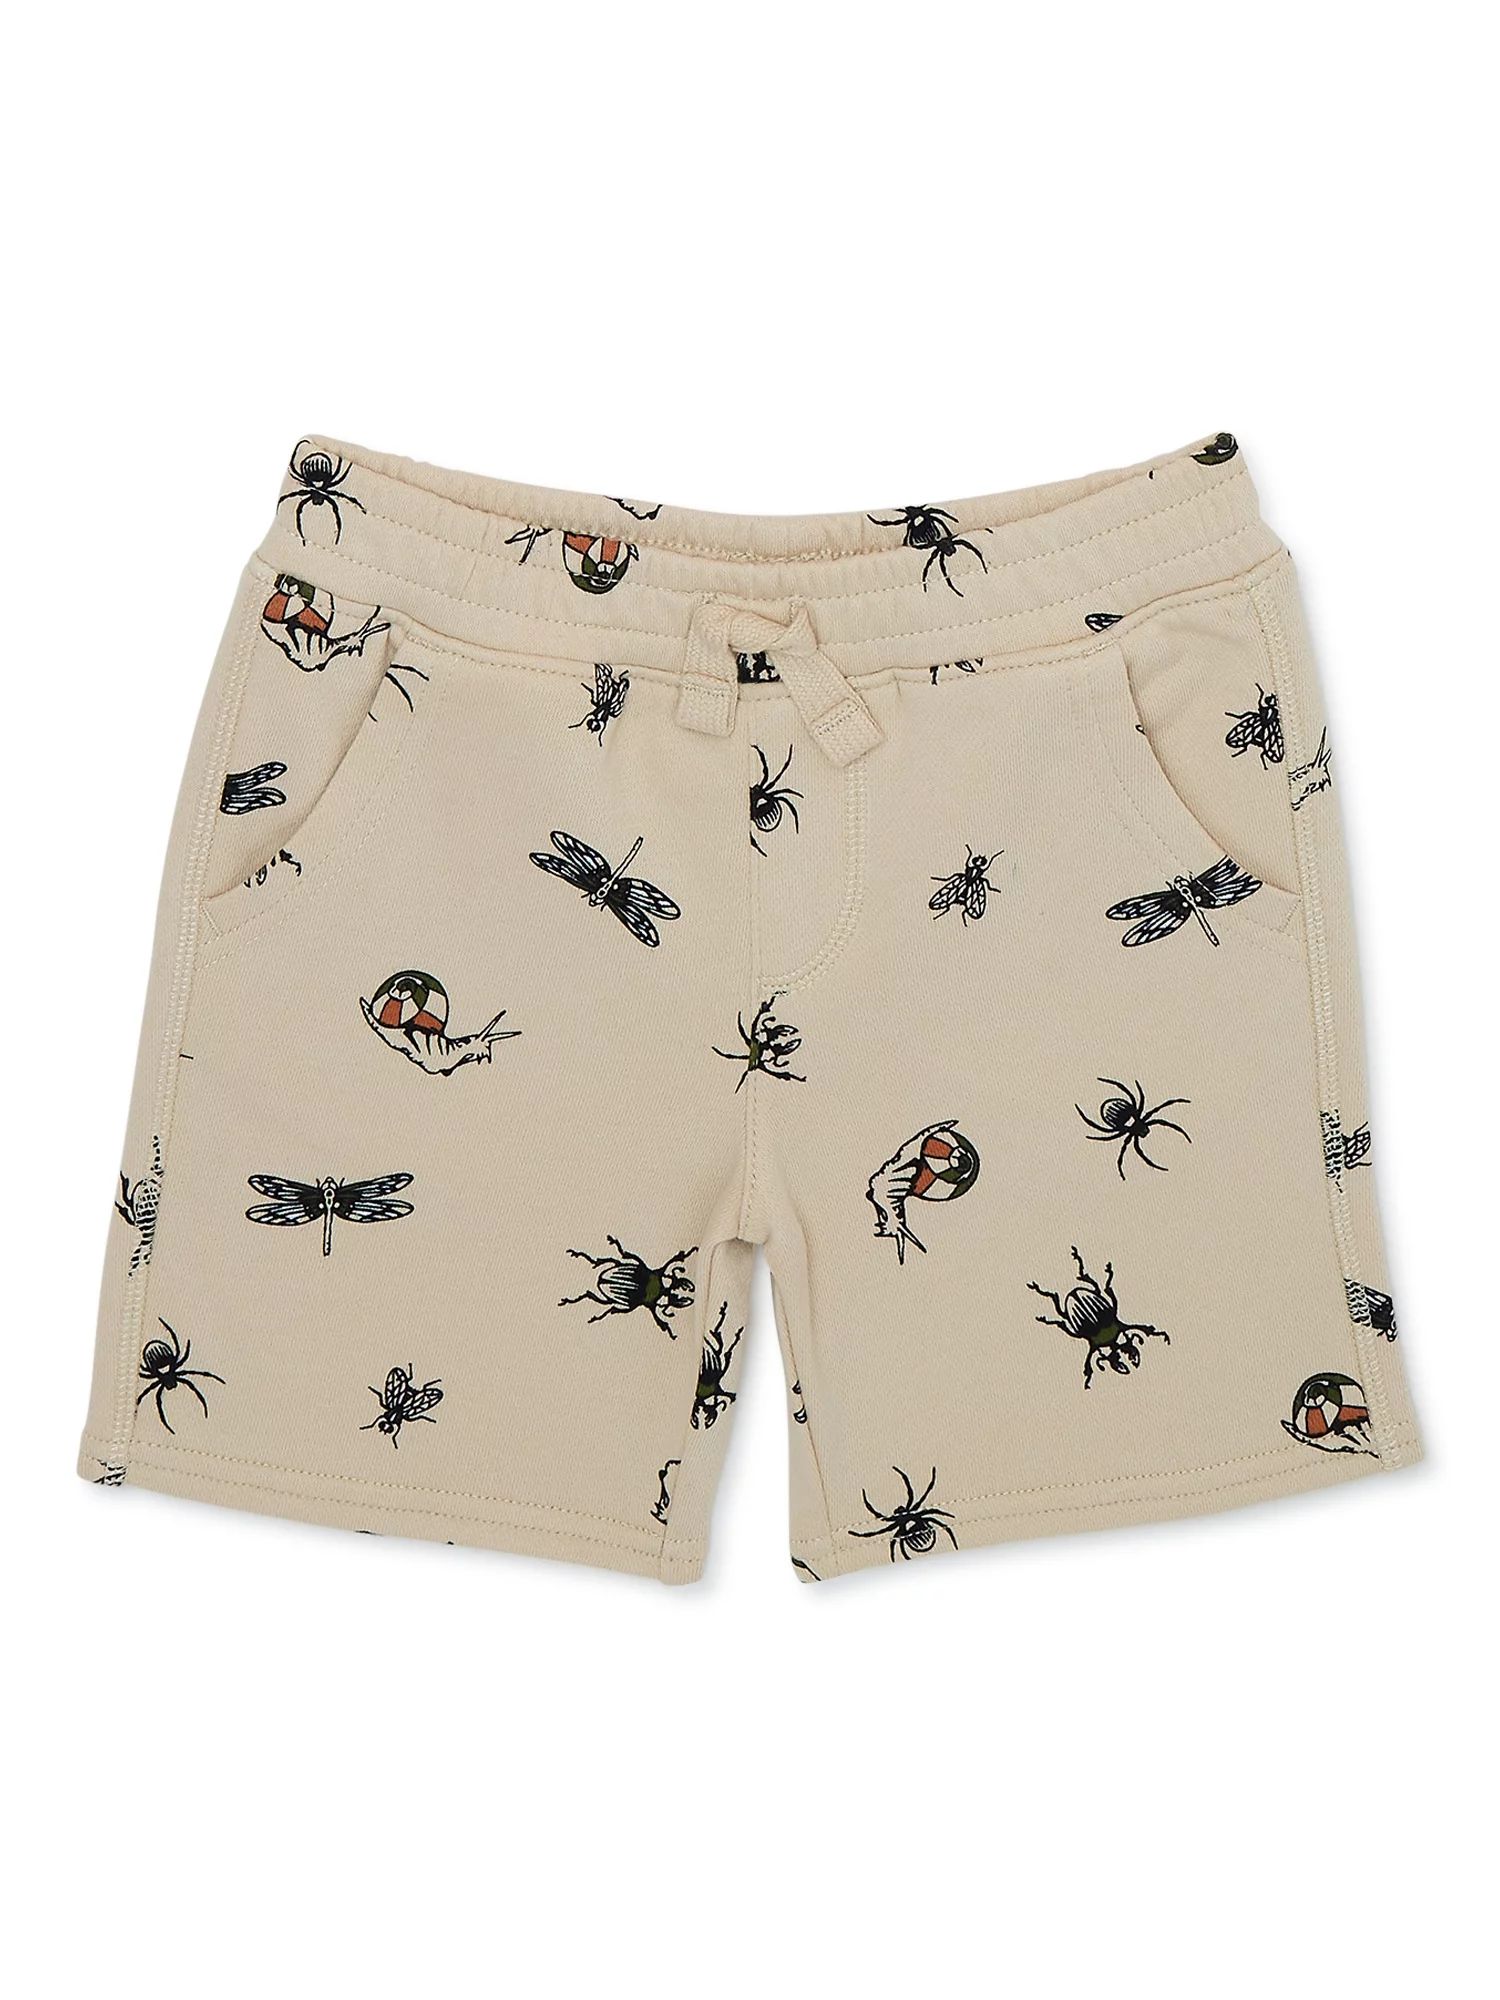 Garanimals Toddler Boys French Terry Cloth Shorts, Sizes 12M-5T | Walmart (US)